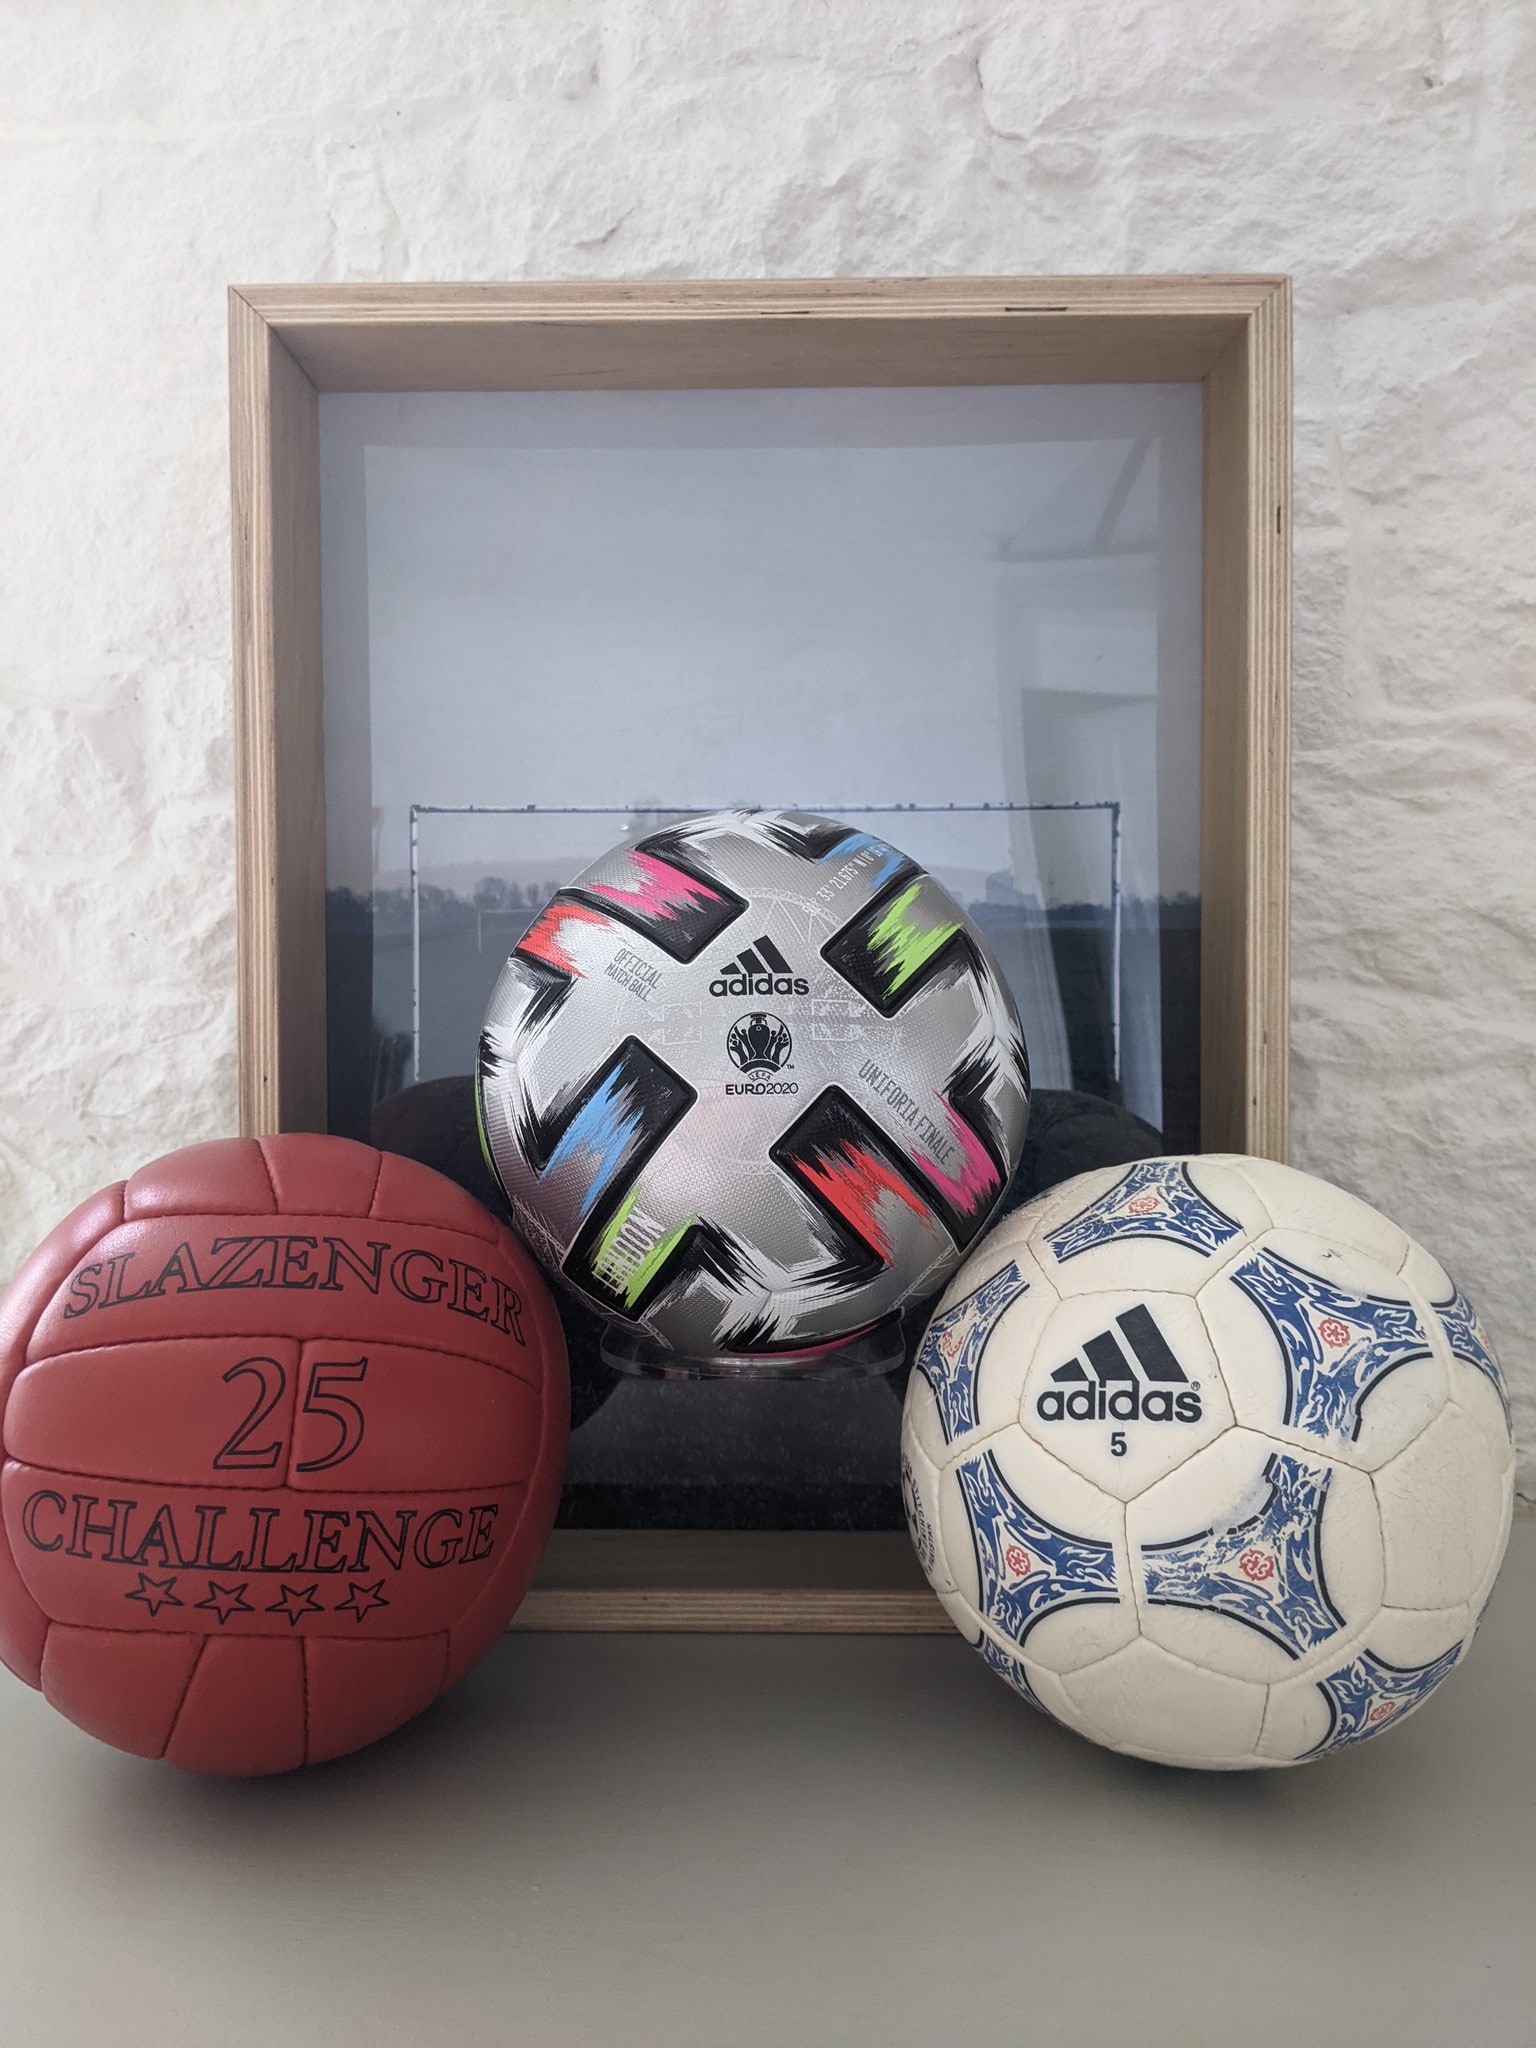 Matchball Displays on Twitter: "Wembley finals ball collection.... Slazenger Challenge Adidas Questra Europa Adidas Uniforia Finale #Euro2020Final https://t.co/M3ZHPWGVCn" / Twitter